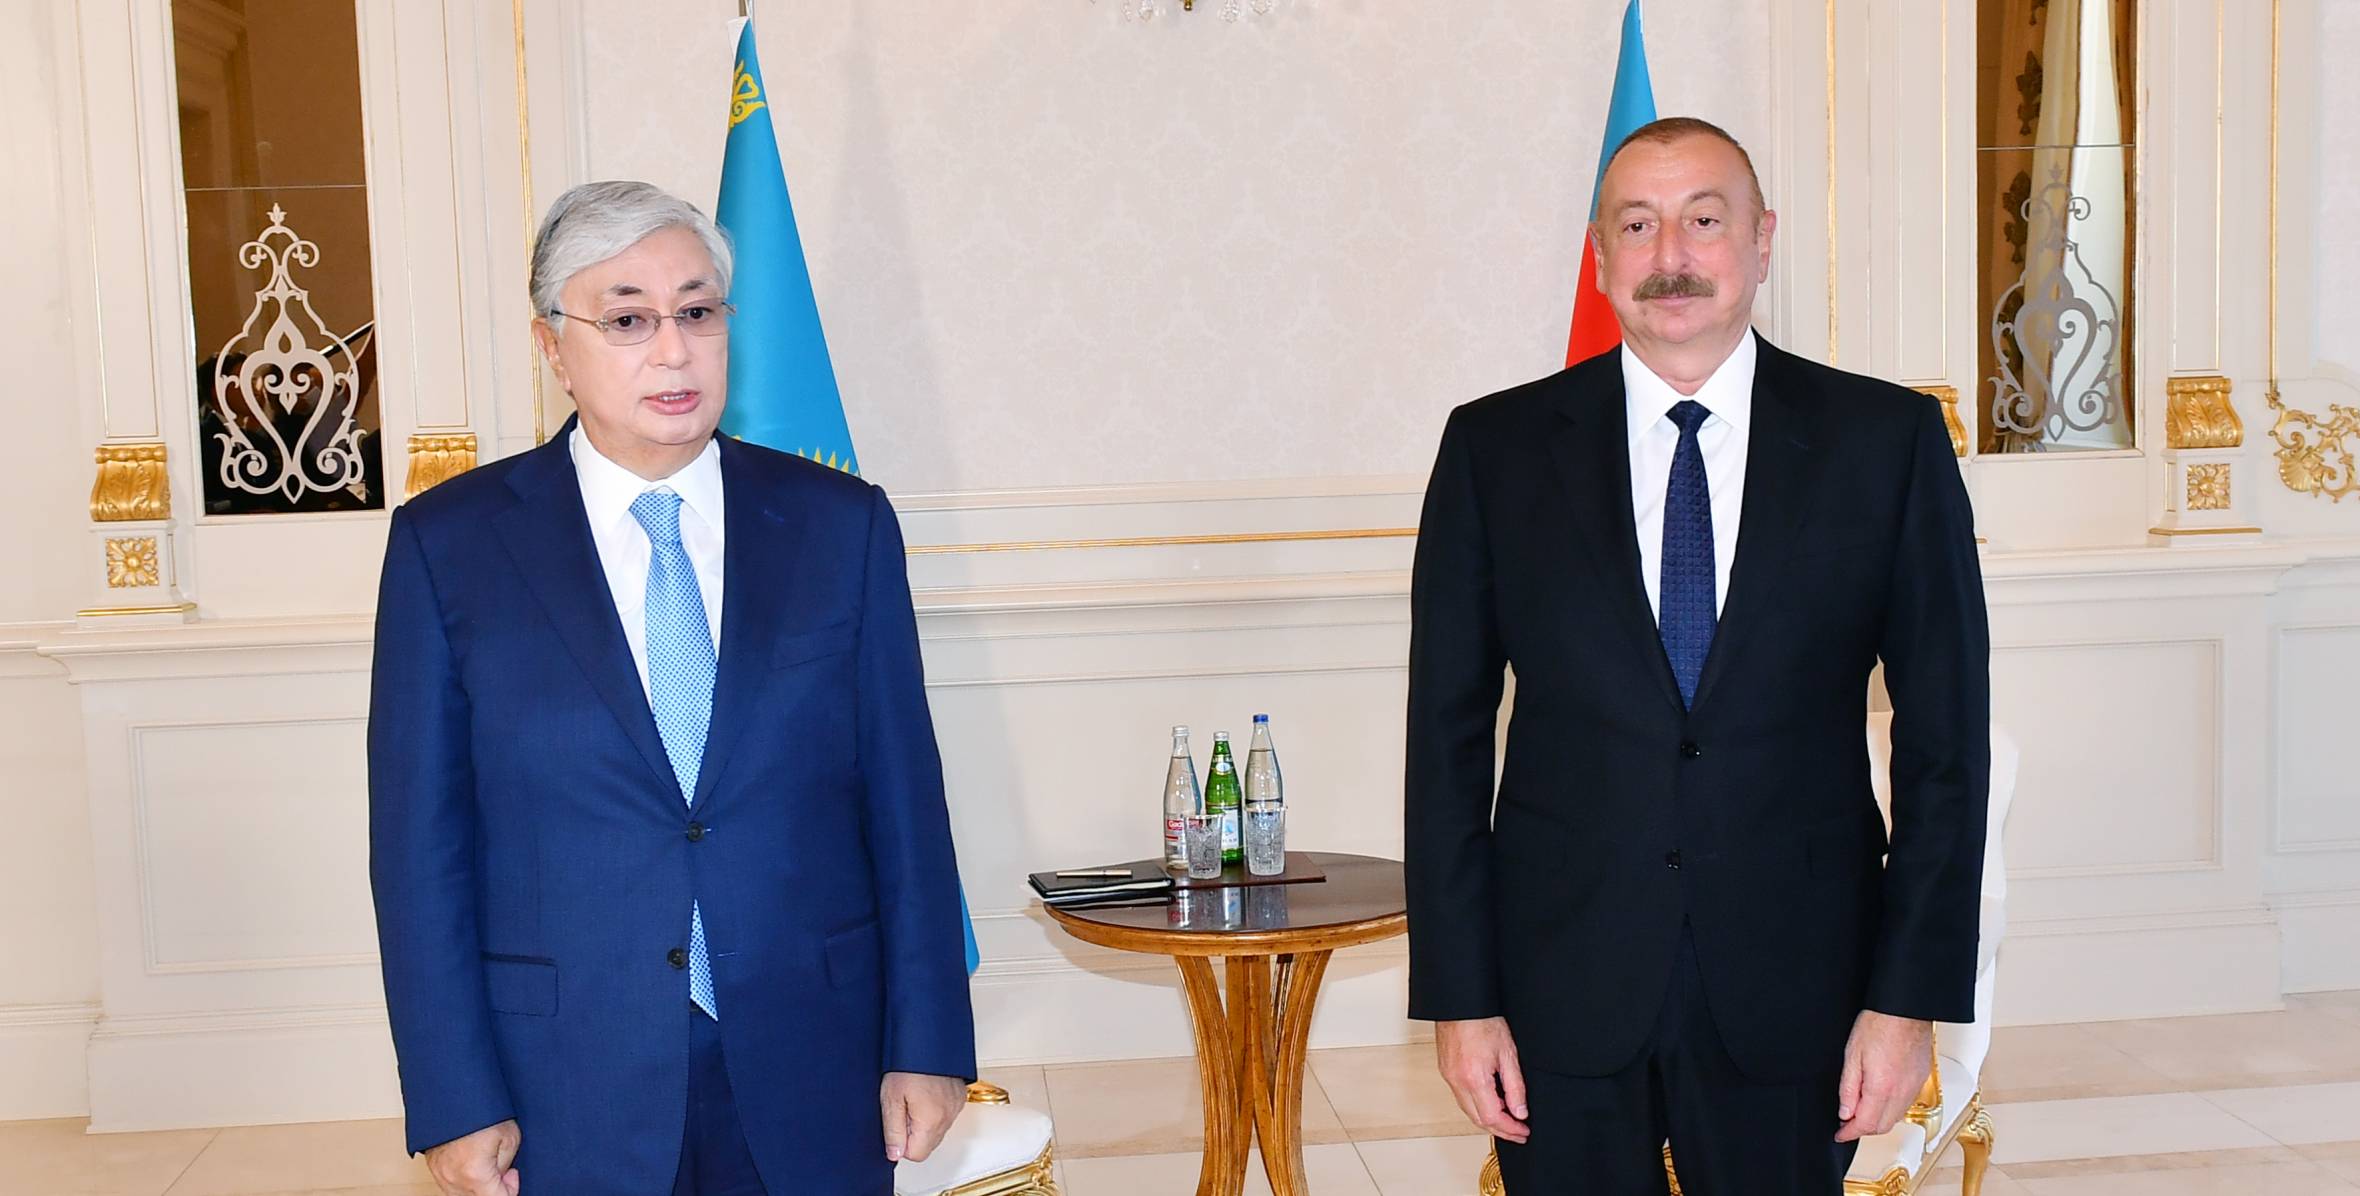 Ильхам Алиев награжден высшим орденом Казахстана «Алтын кыран» - «Золотой орел»